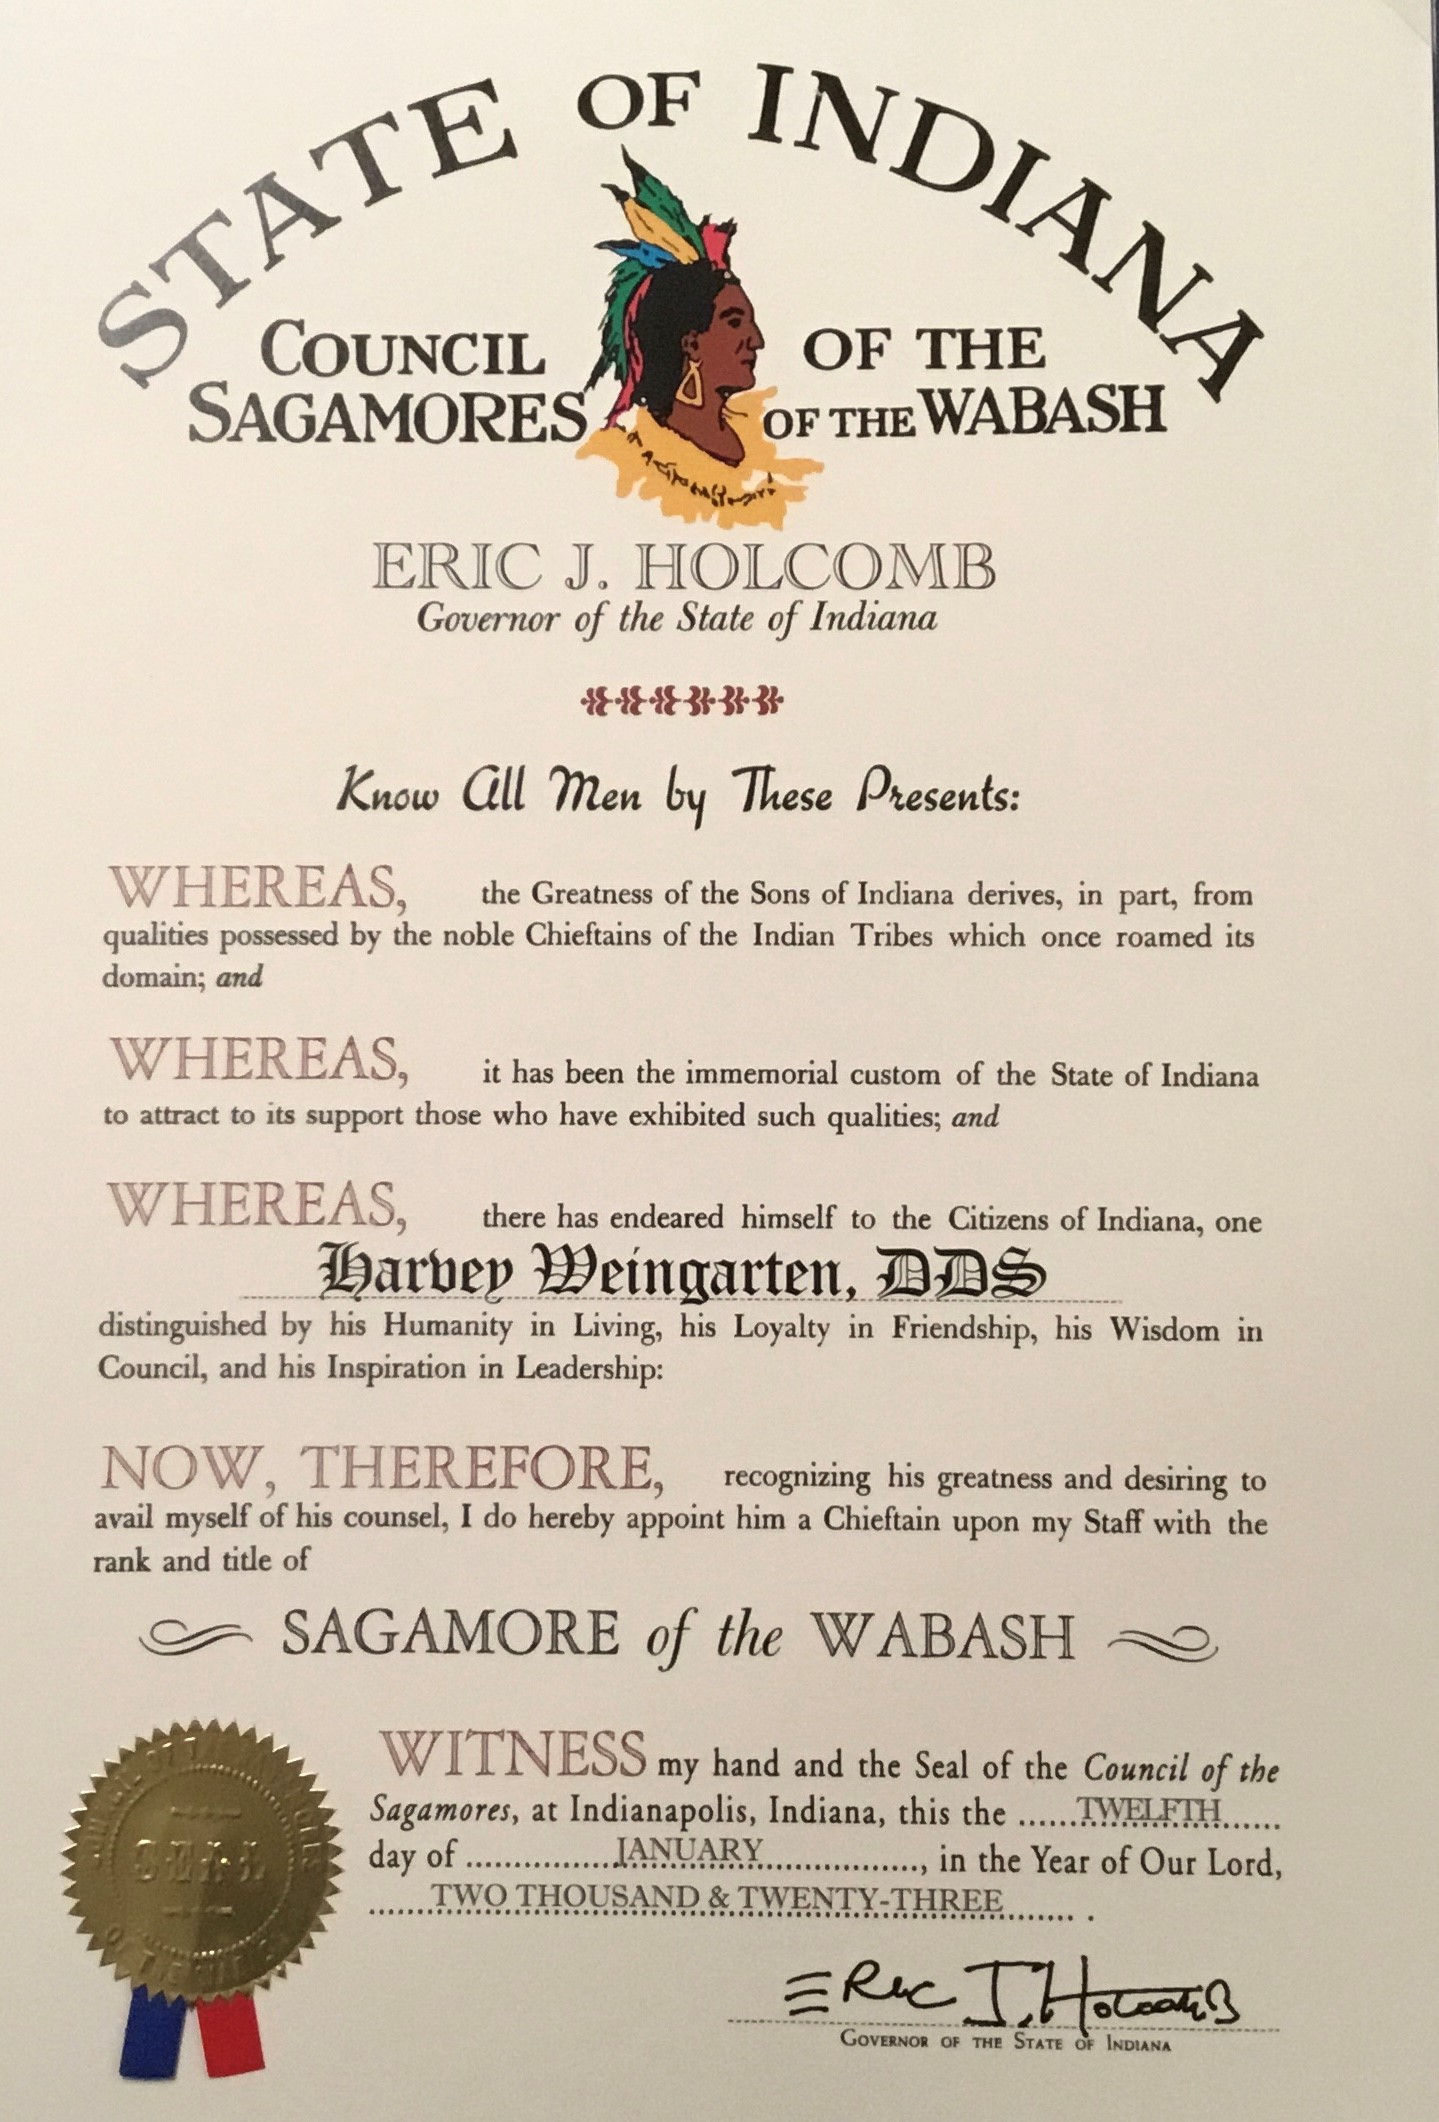 The Sagamore of the Wabash proclamation